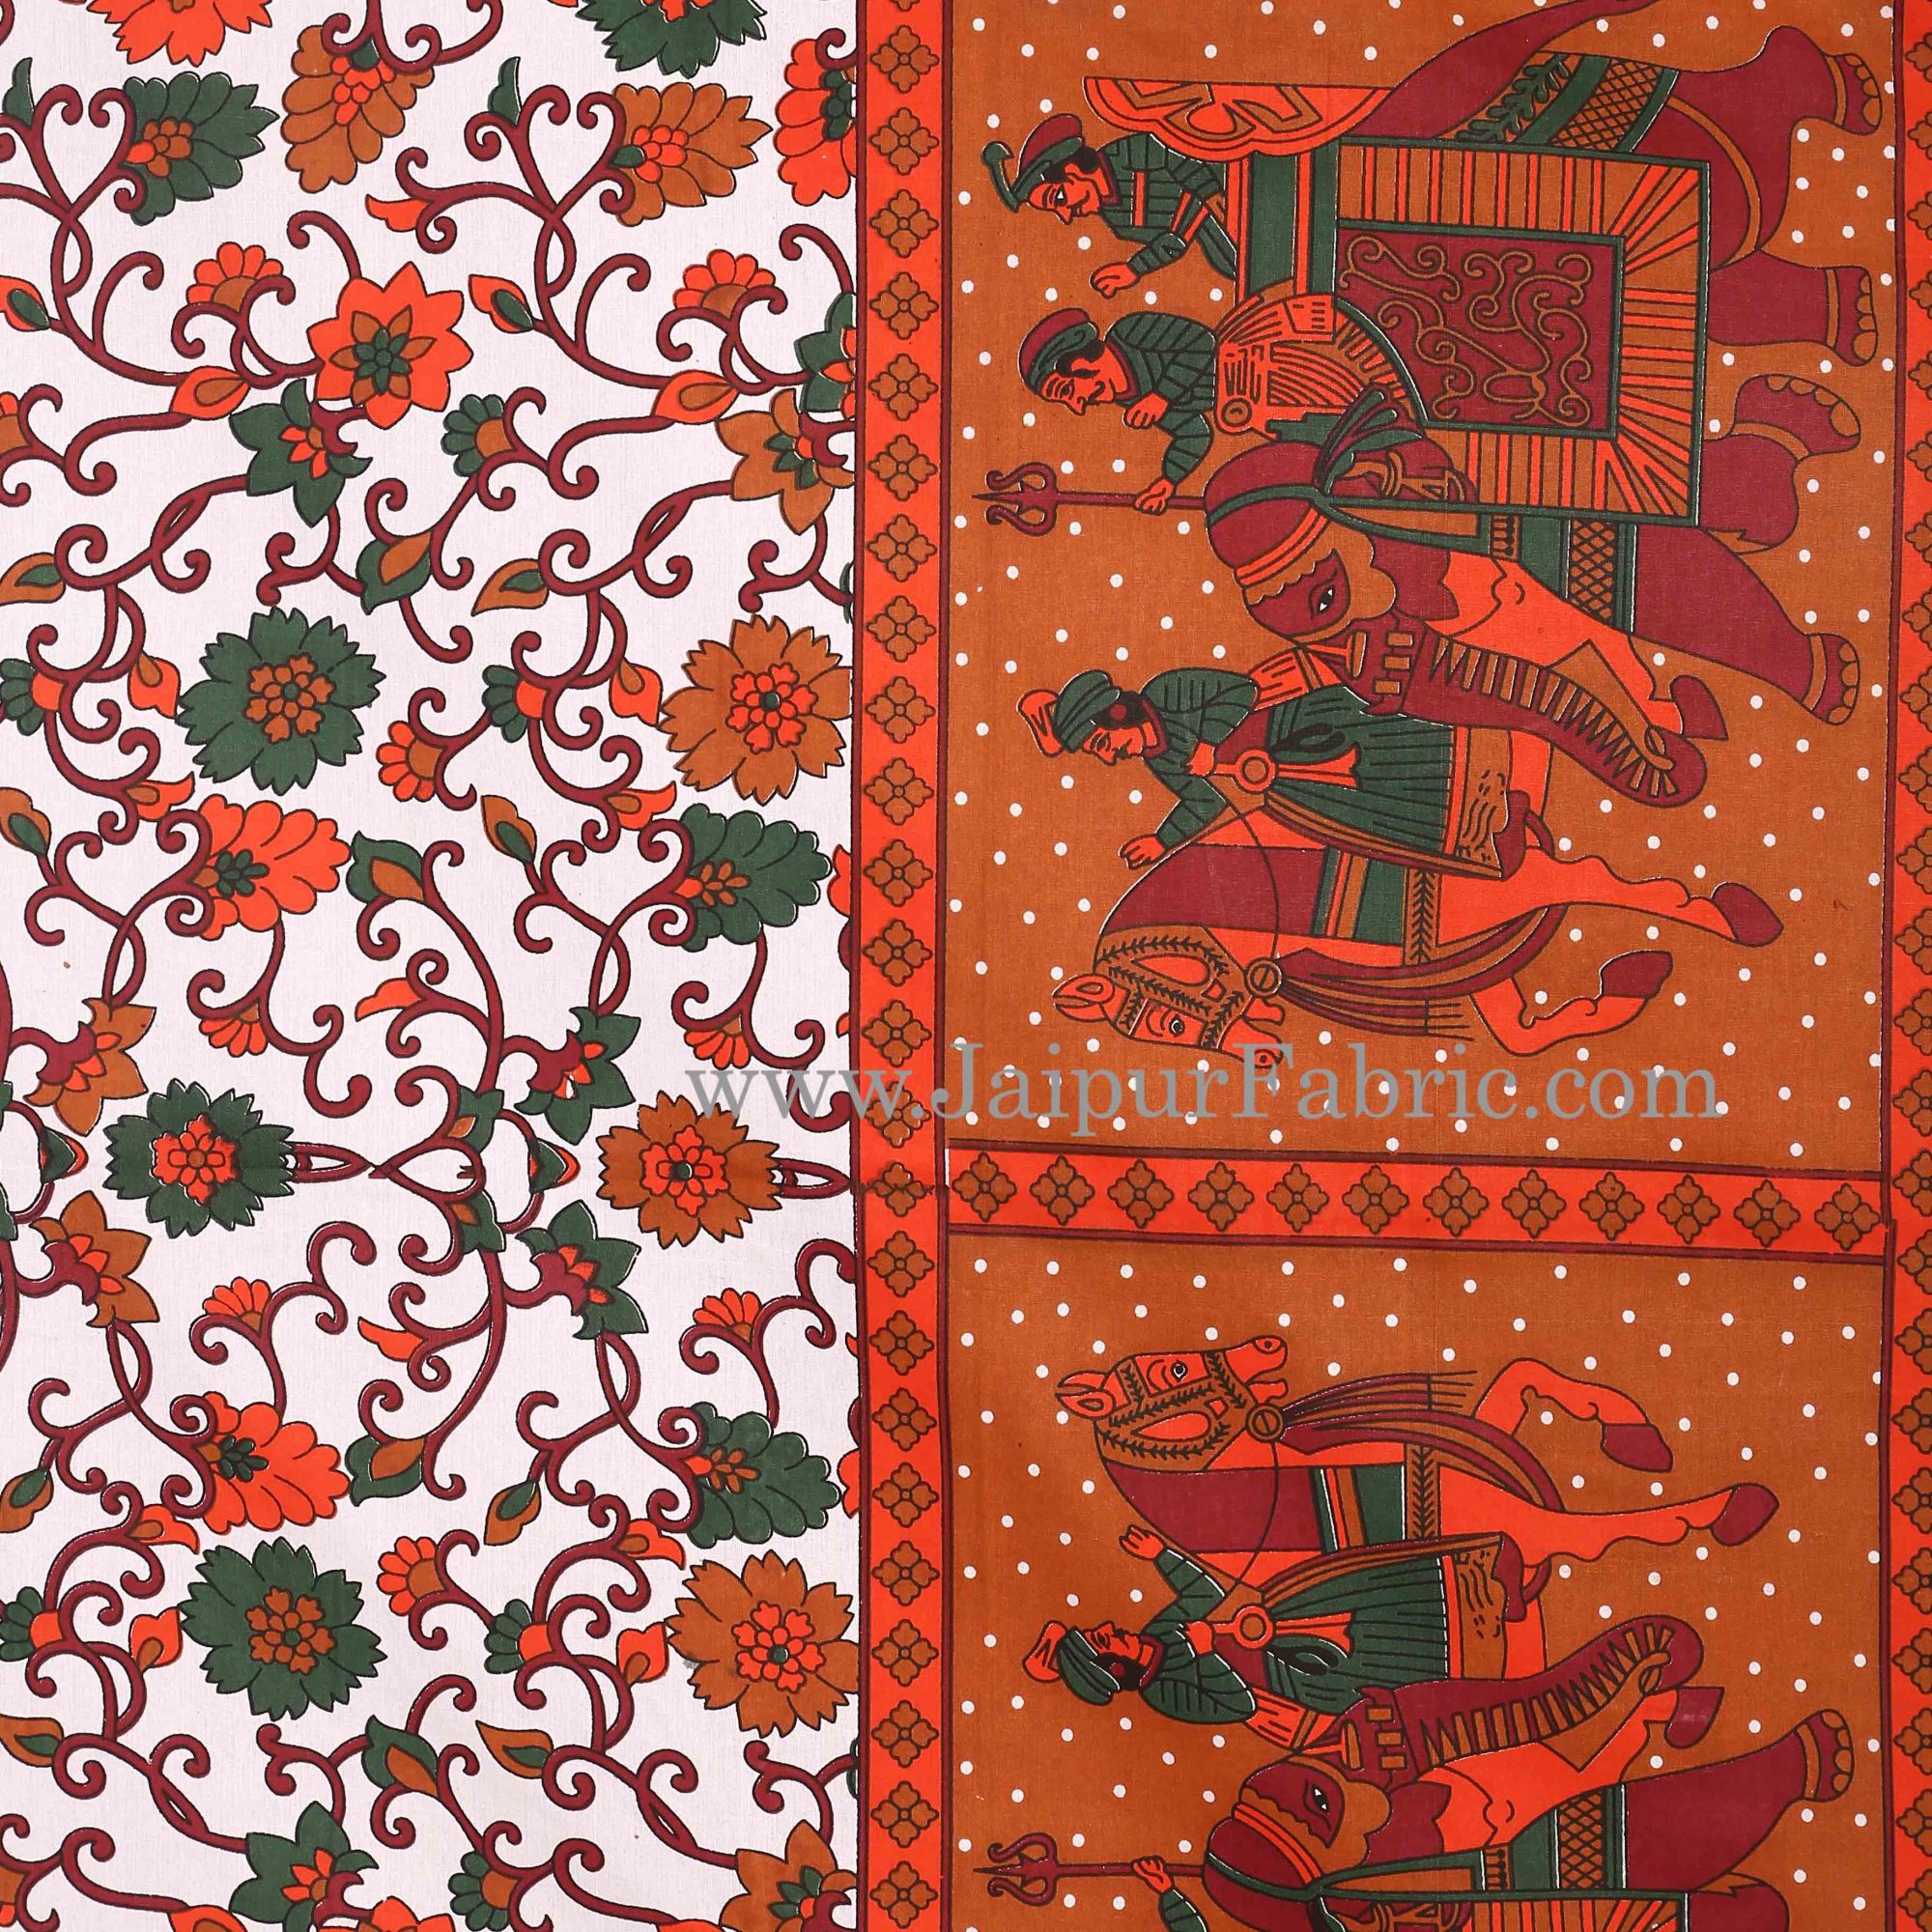 Brown Gangaur Pattern cotton Double Bed sheet